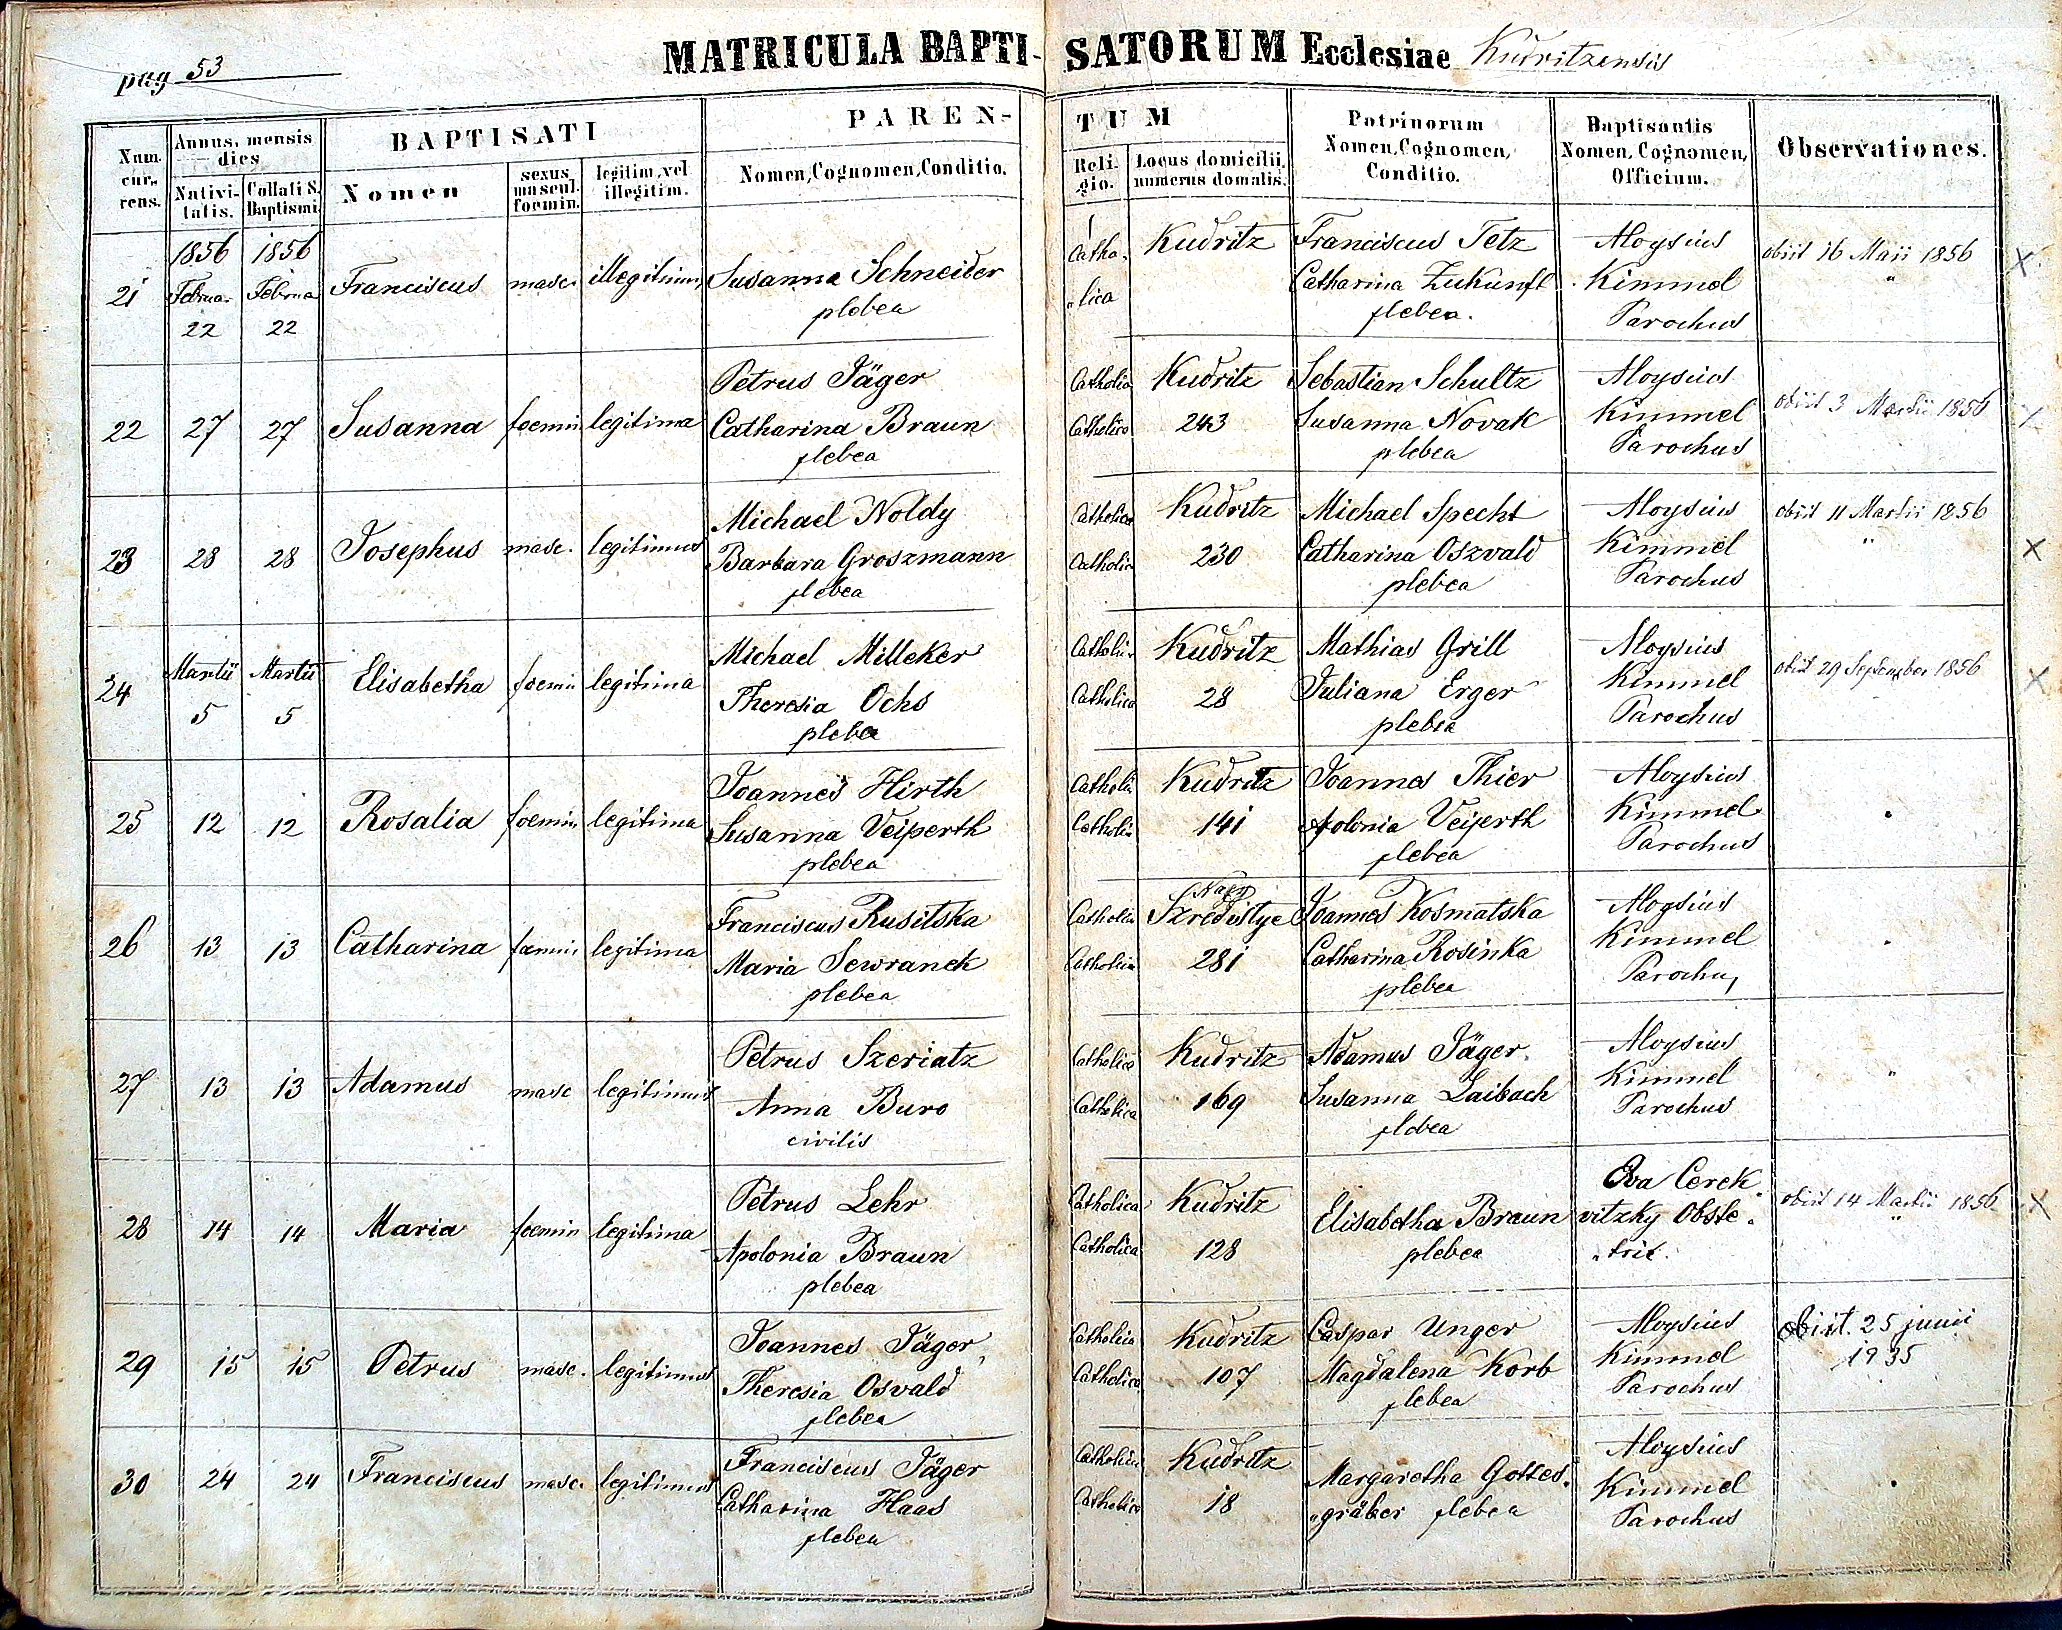 images/church_records/BIRTHS/1852-1870B/053